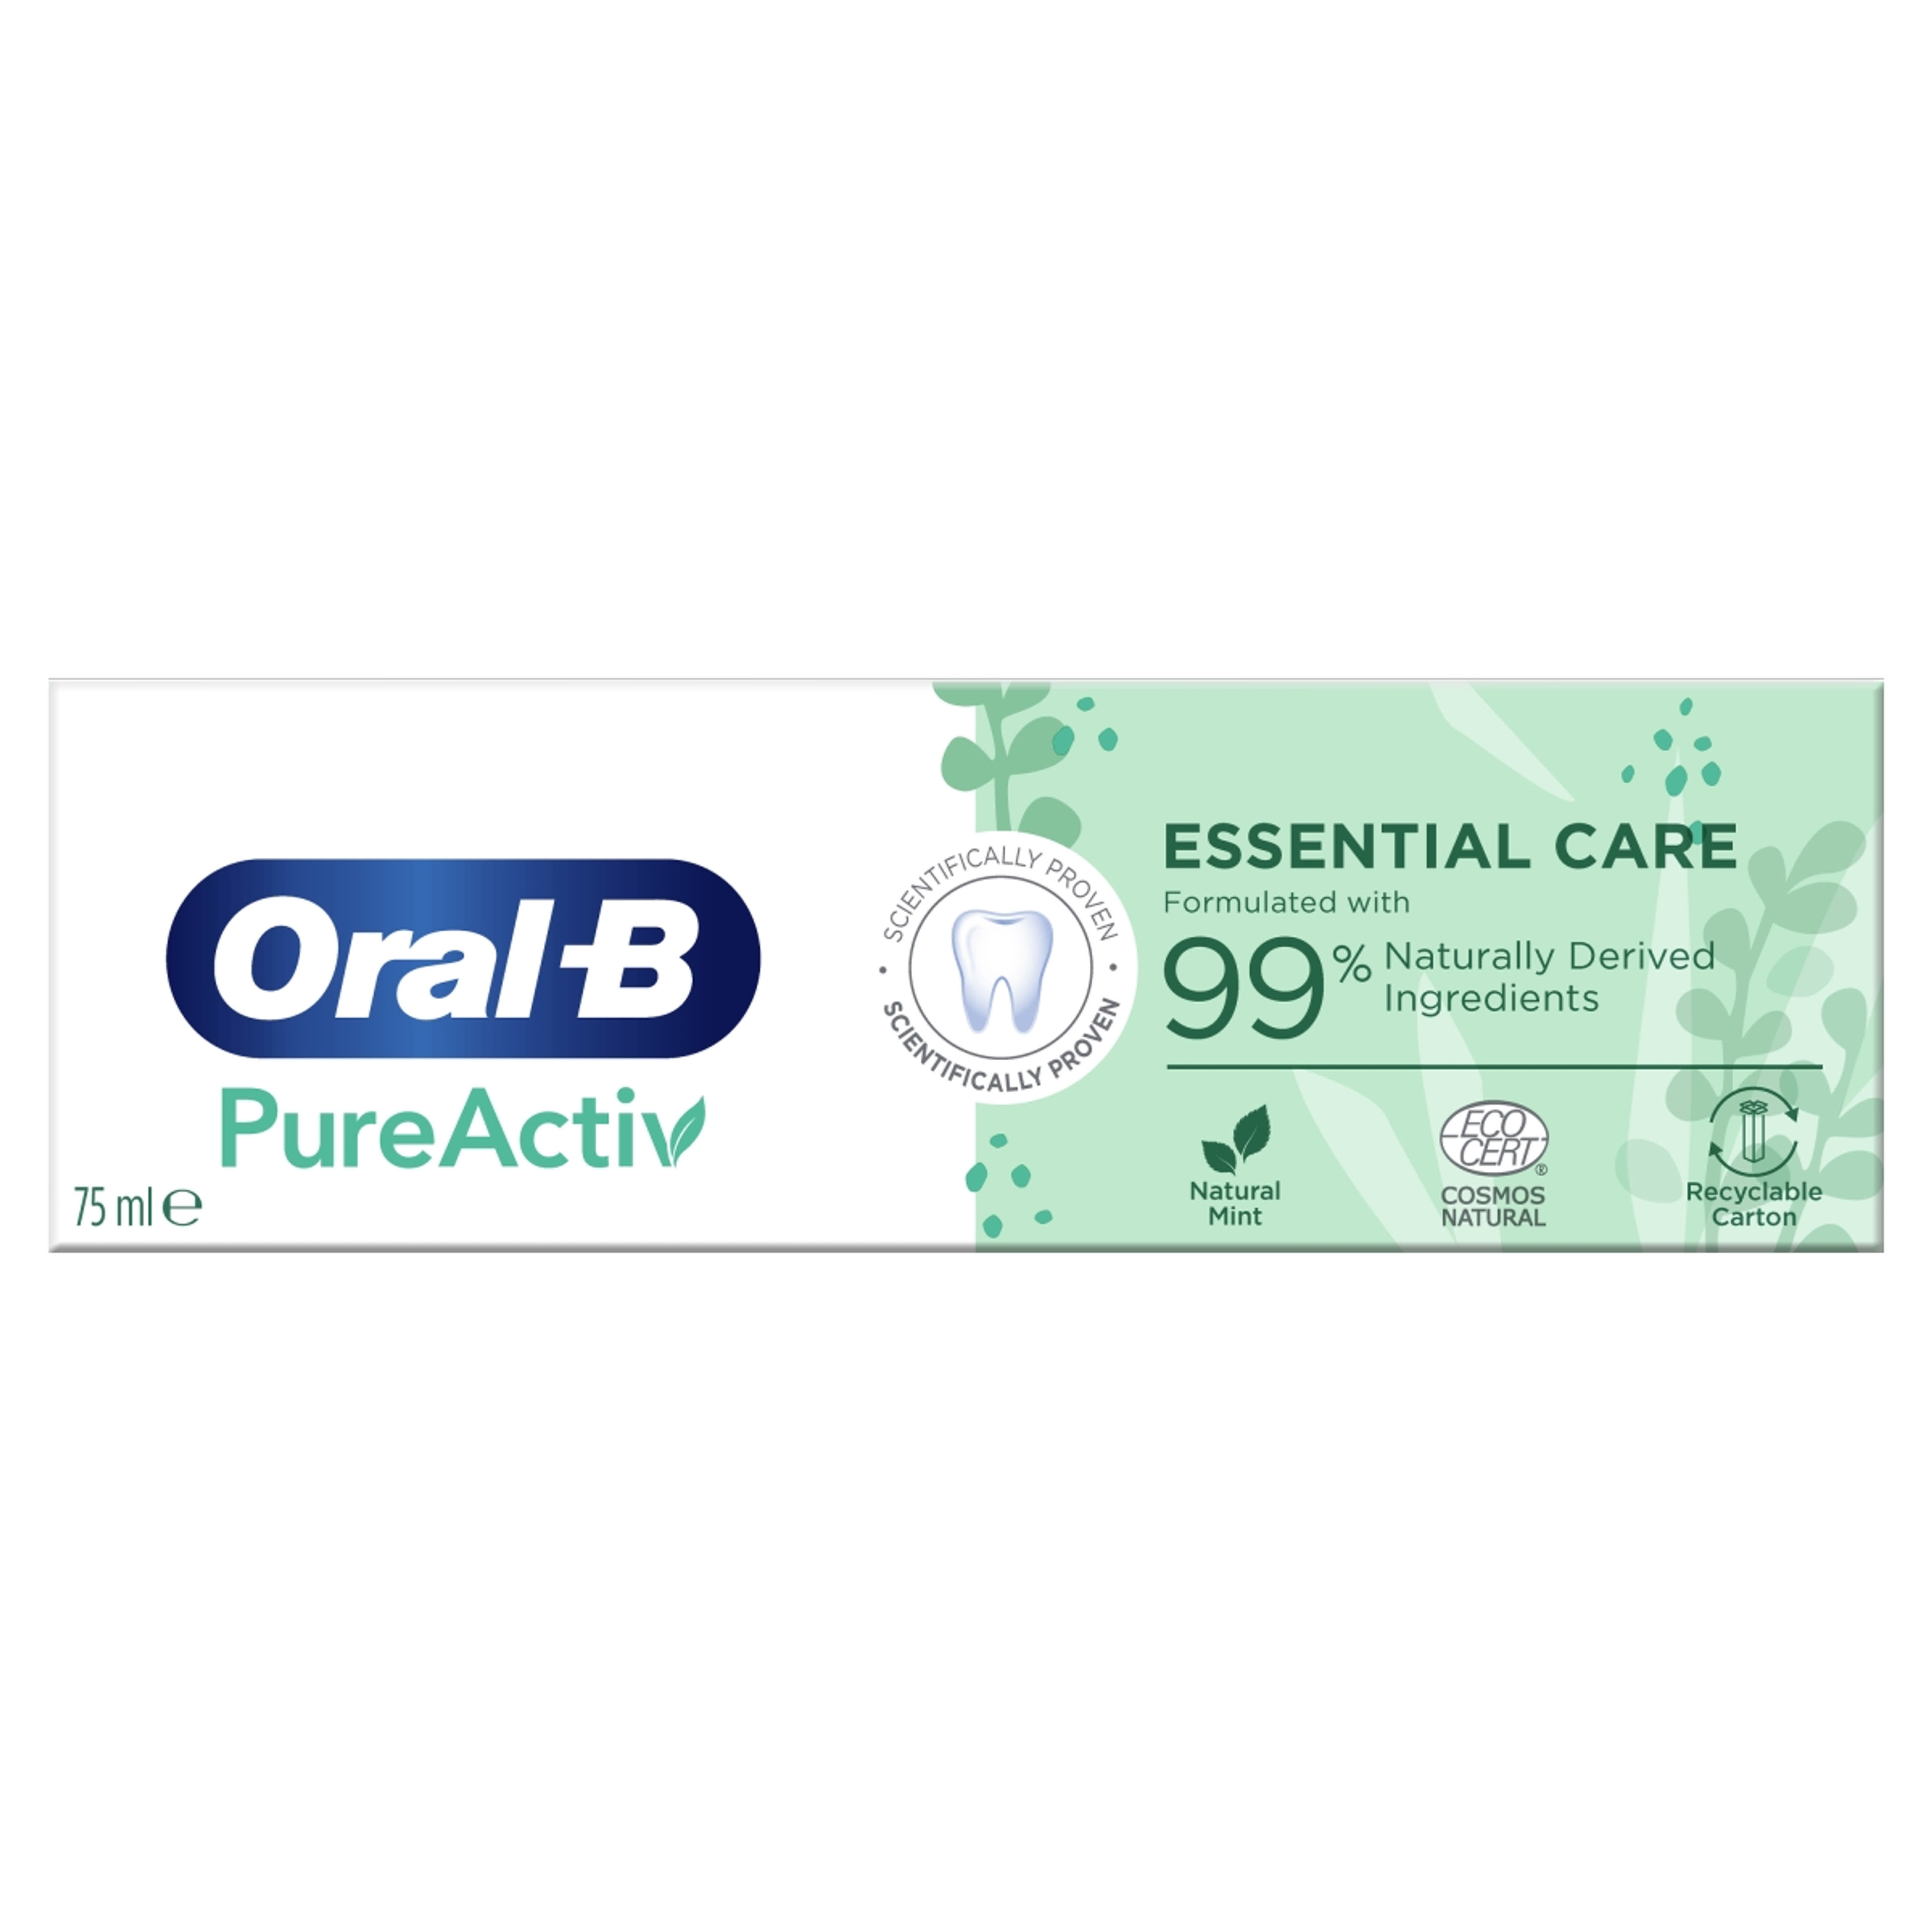 Oral-B Pure Activ Essential Care fogkrém - 75 ml-1